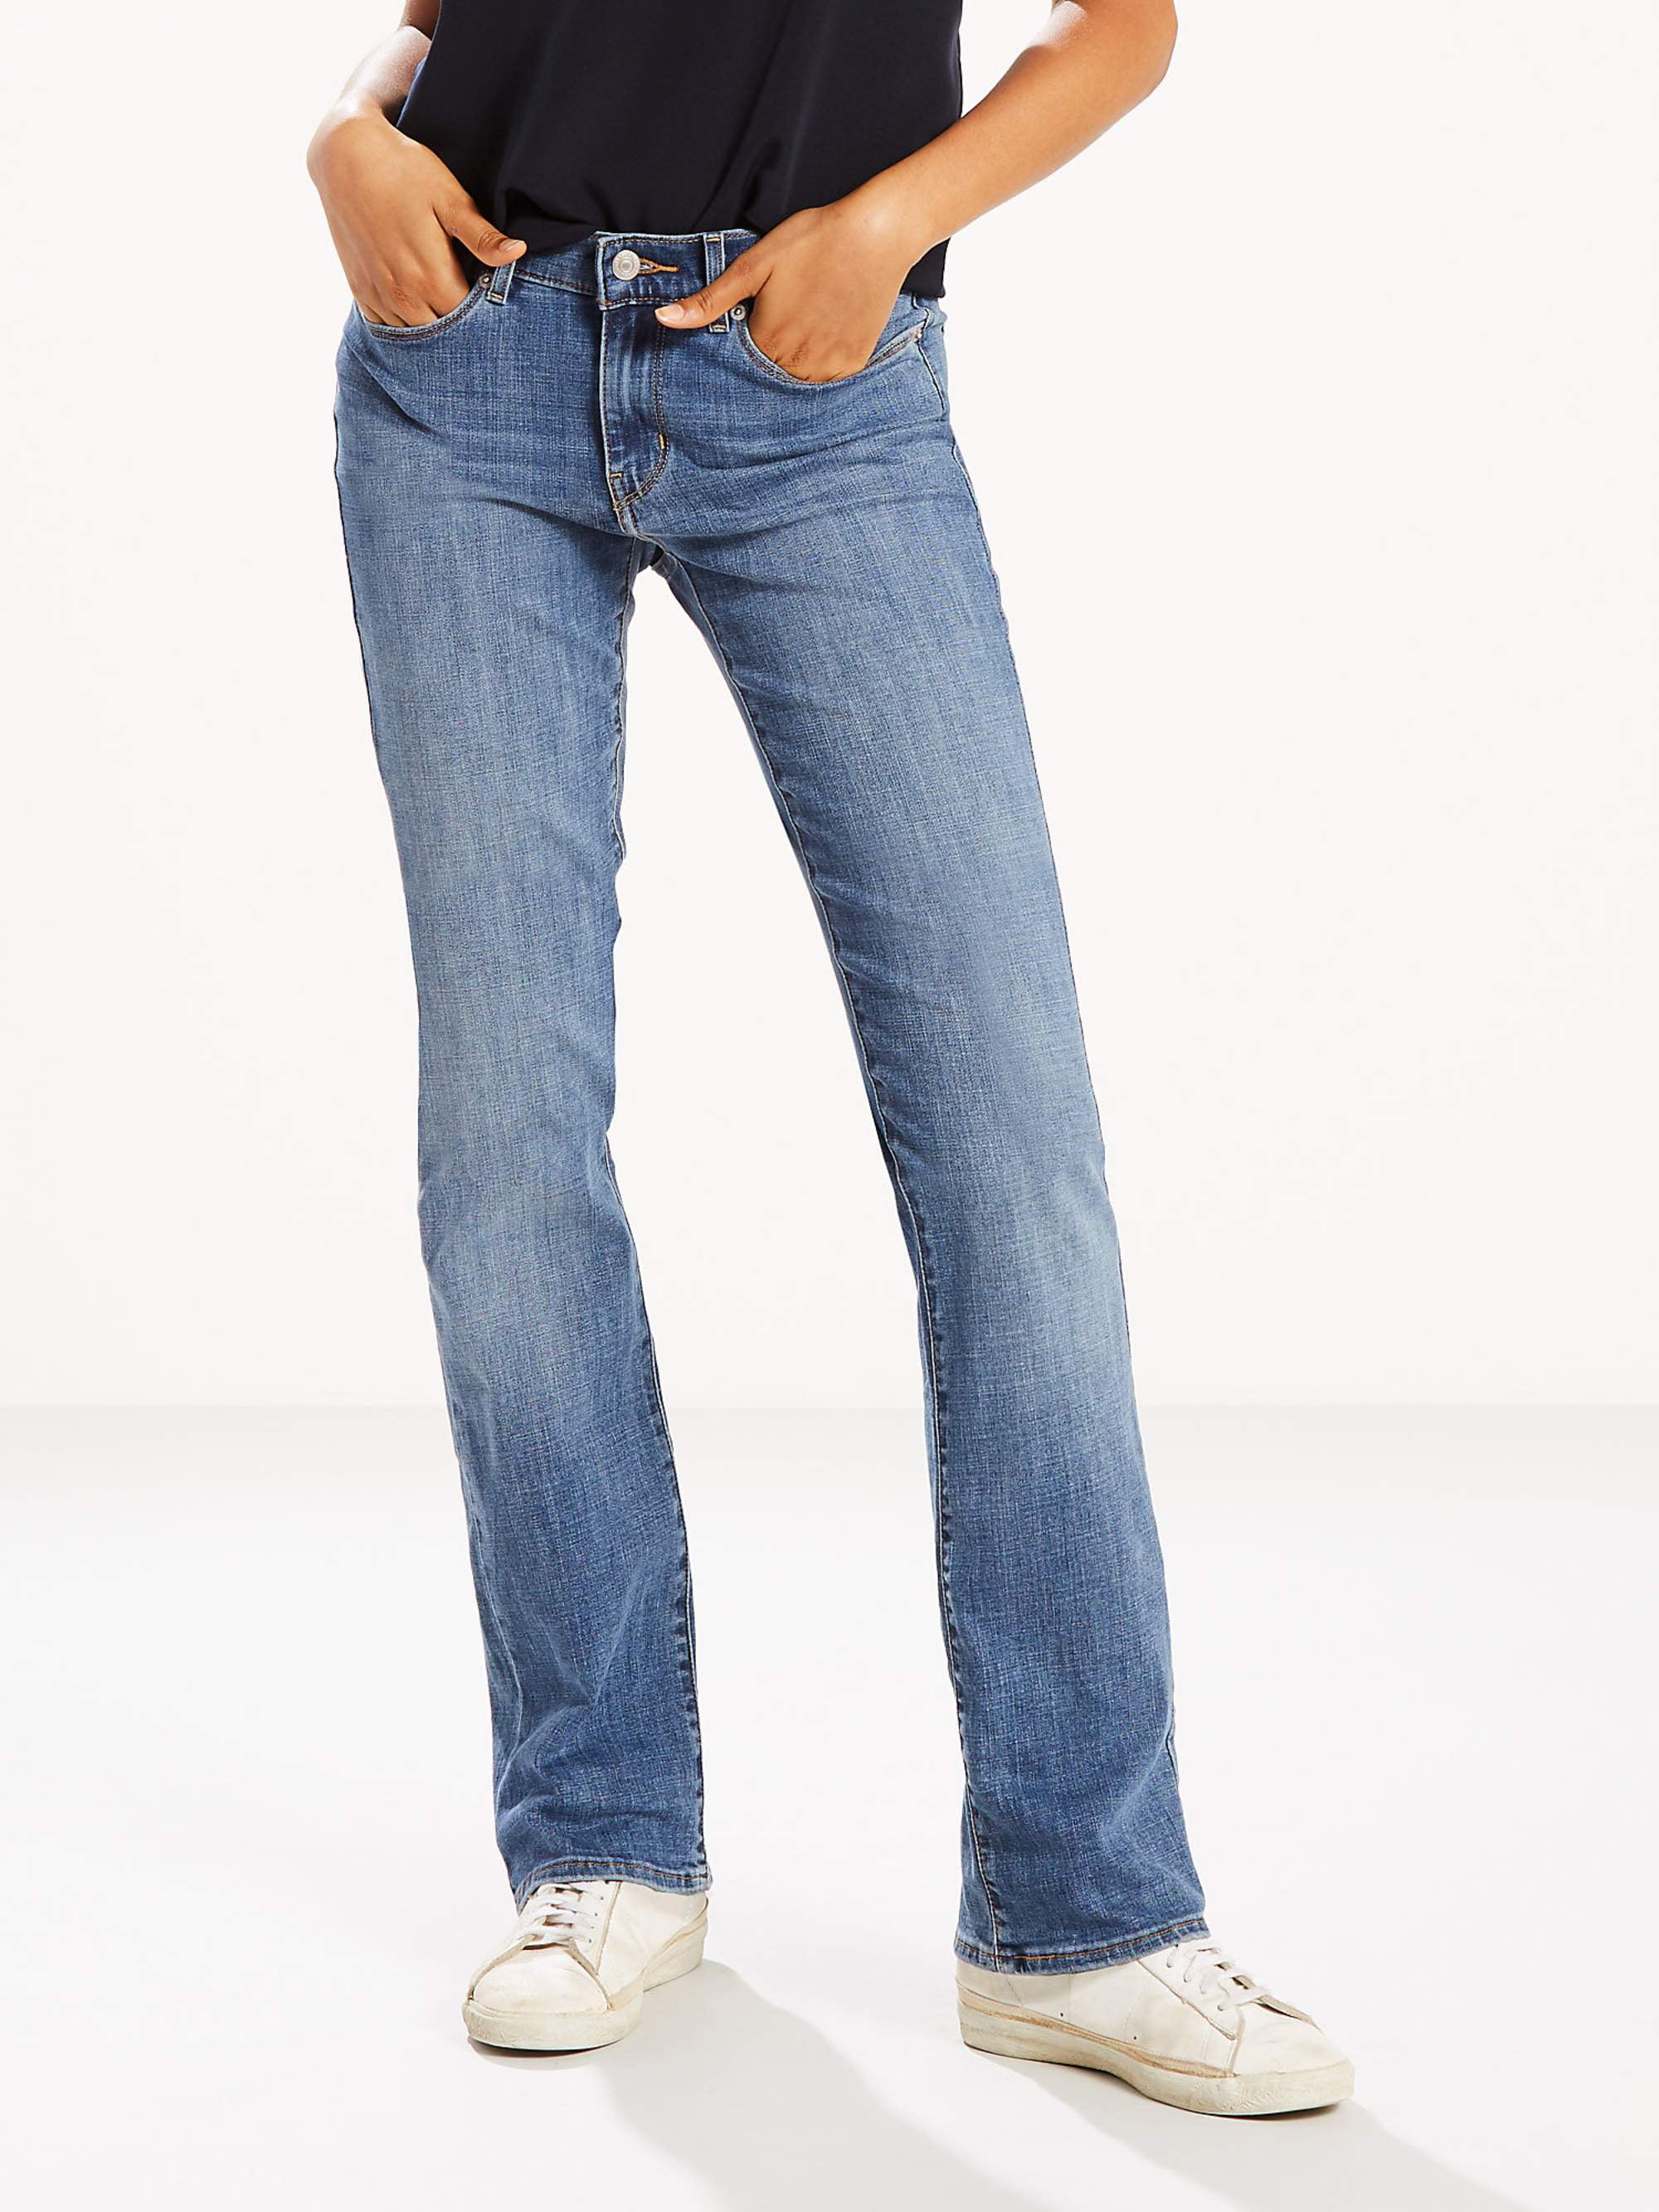 Levi's Women's Classic Bootcut Jeans - Walmart.com